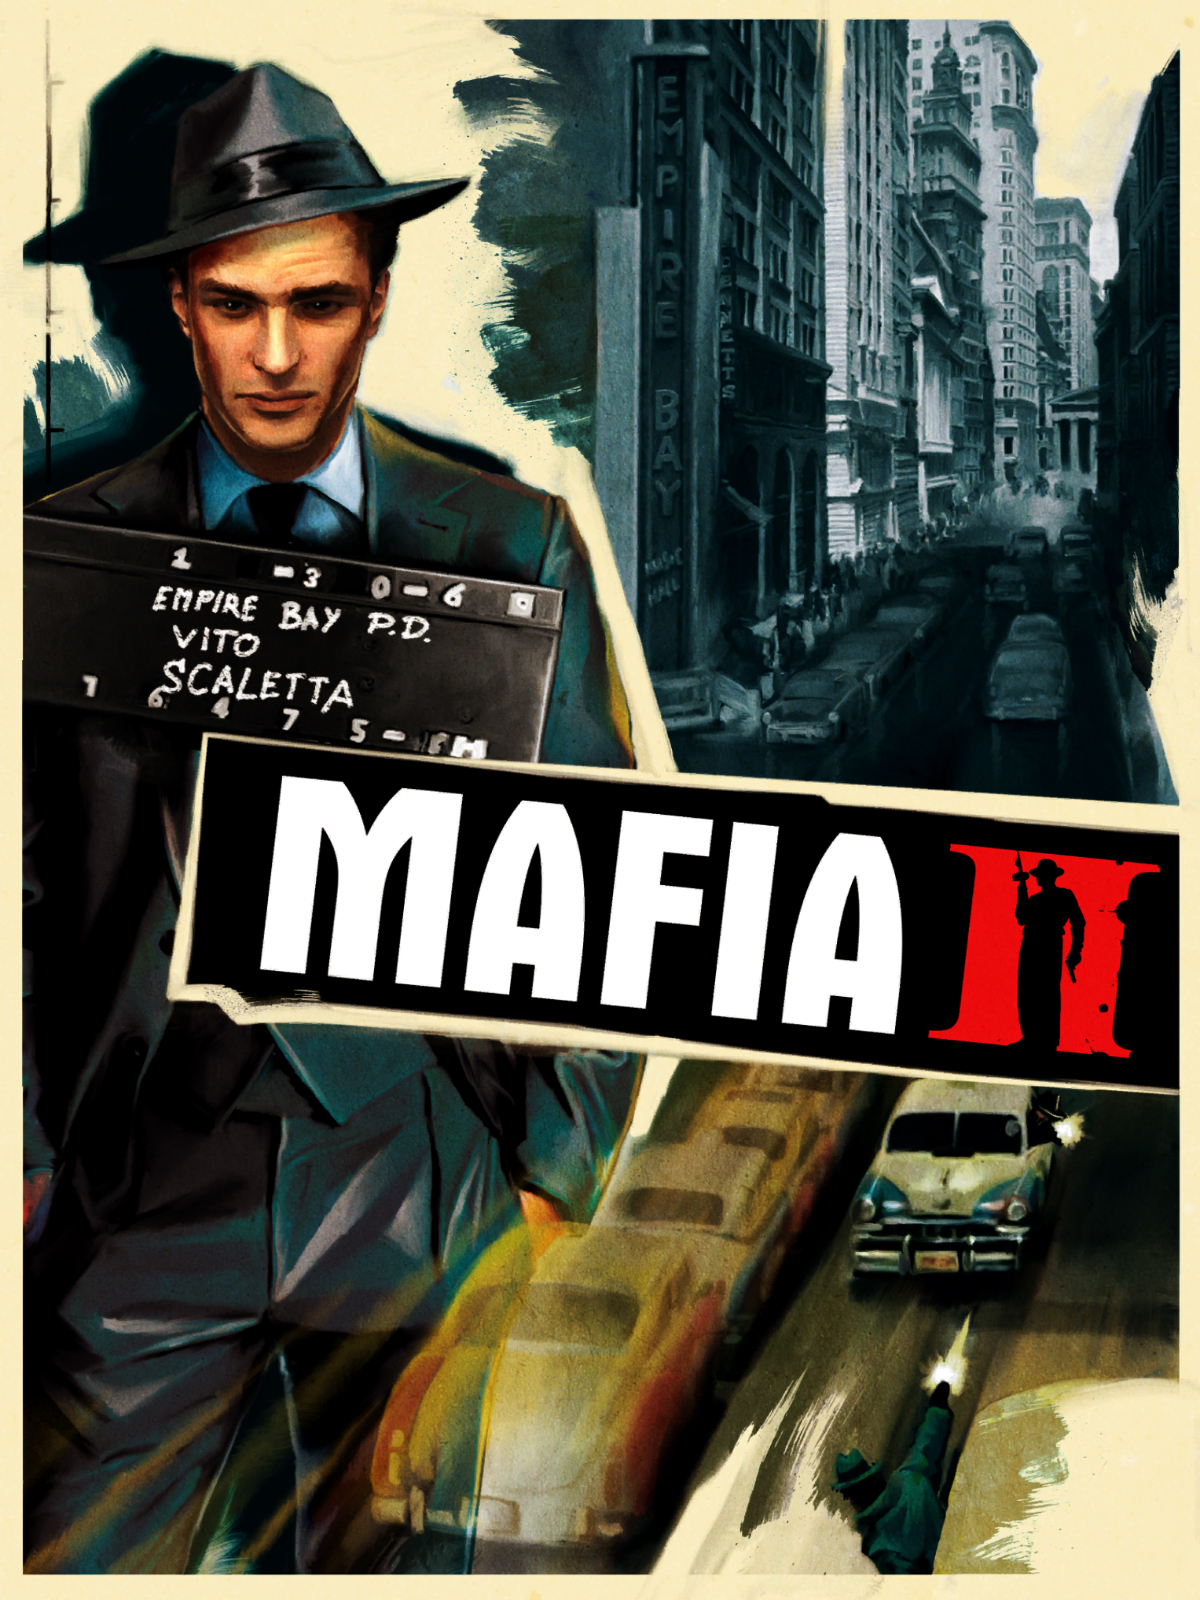 Mafia II HD Game Wallpapers - wallpapers